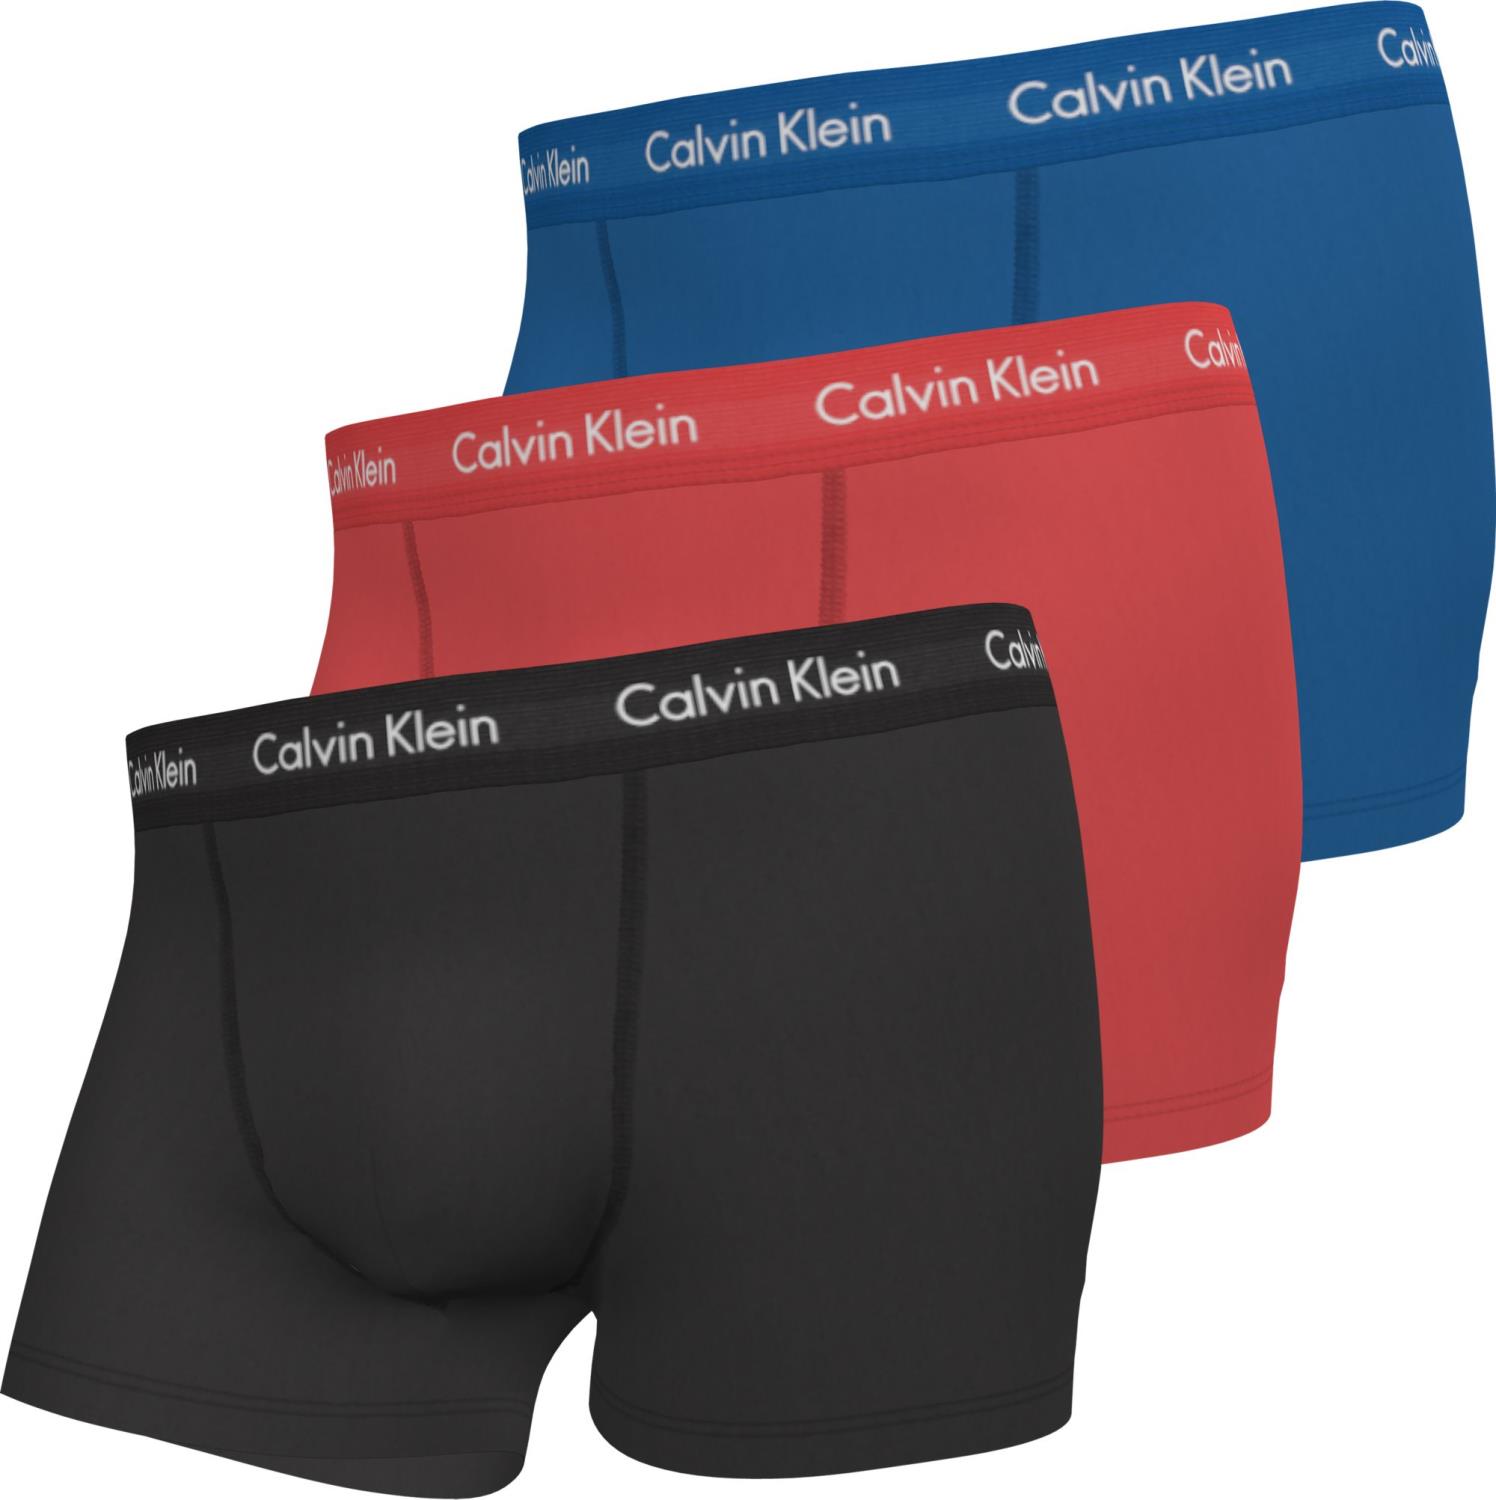 Calvin Klein Cotton Stretch 3 pk Trunks